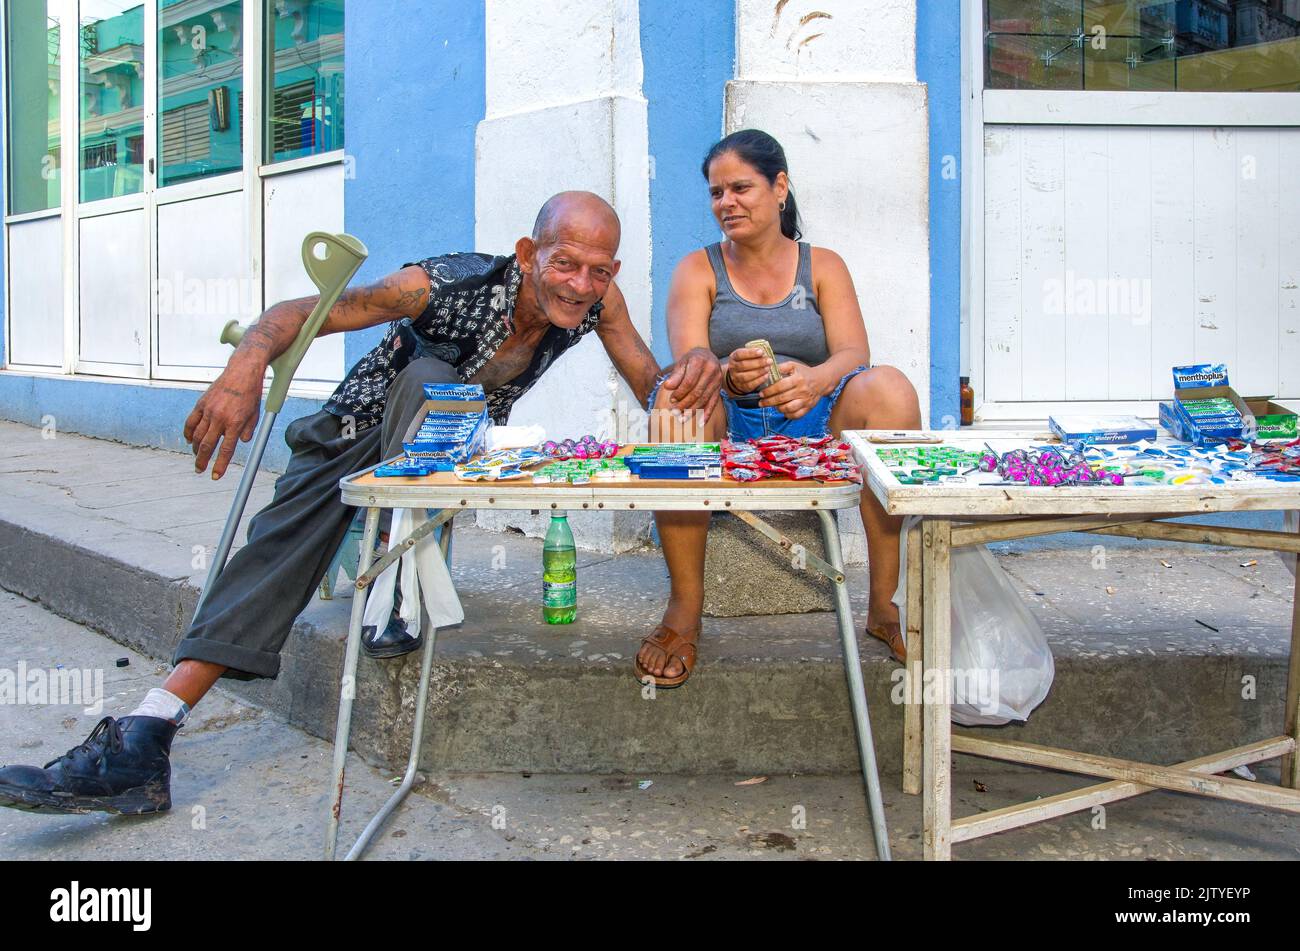 Daily Life In Santa Clara, Cuba, 2013 Stock Photo